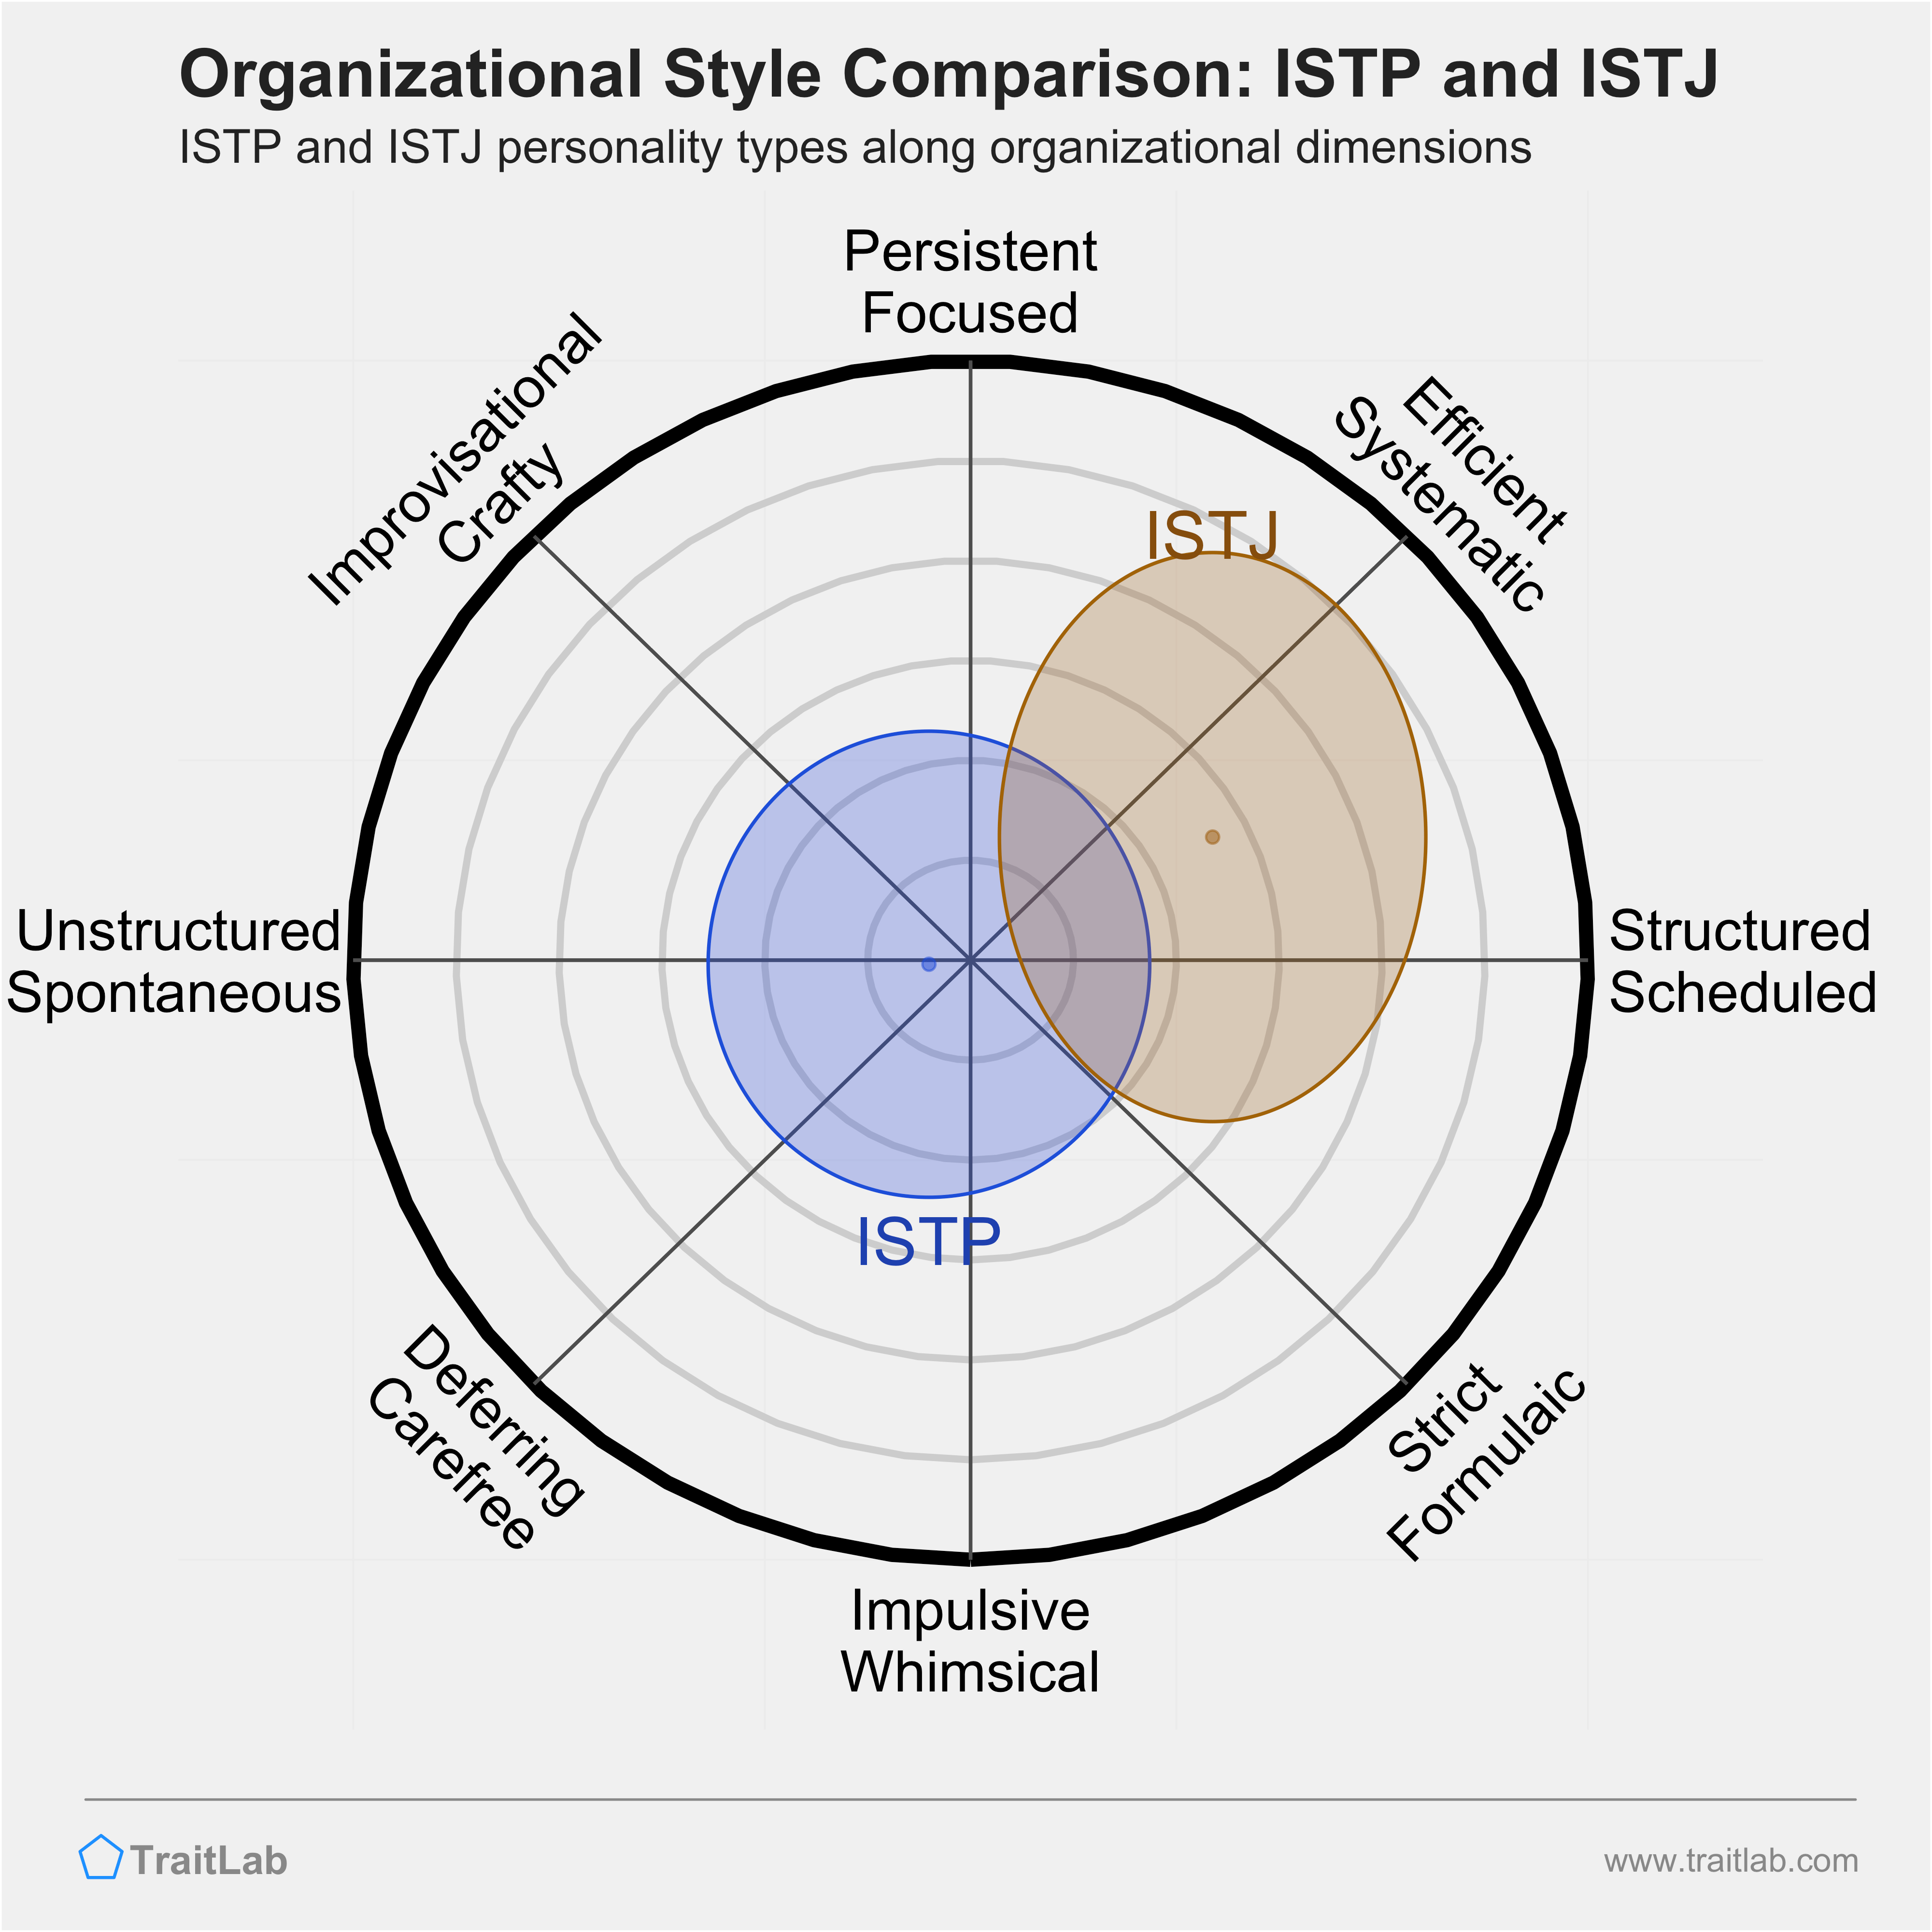 ISTP and ISTJ comparison across organizational dimensions